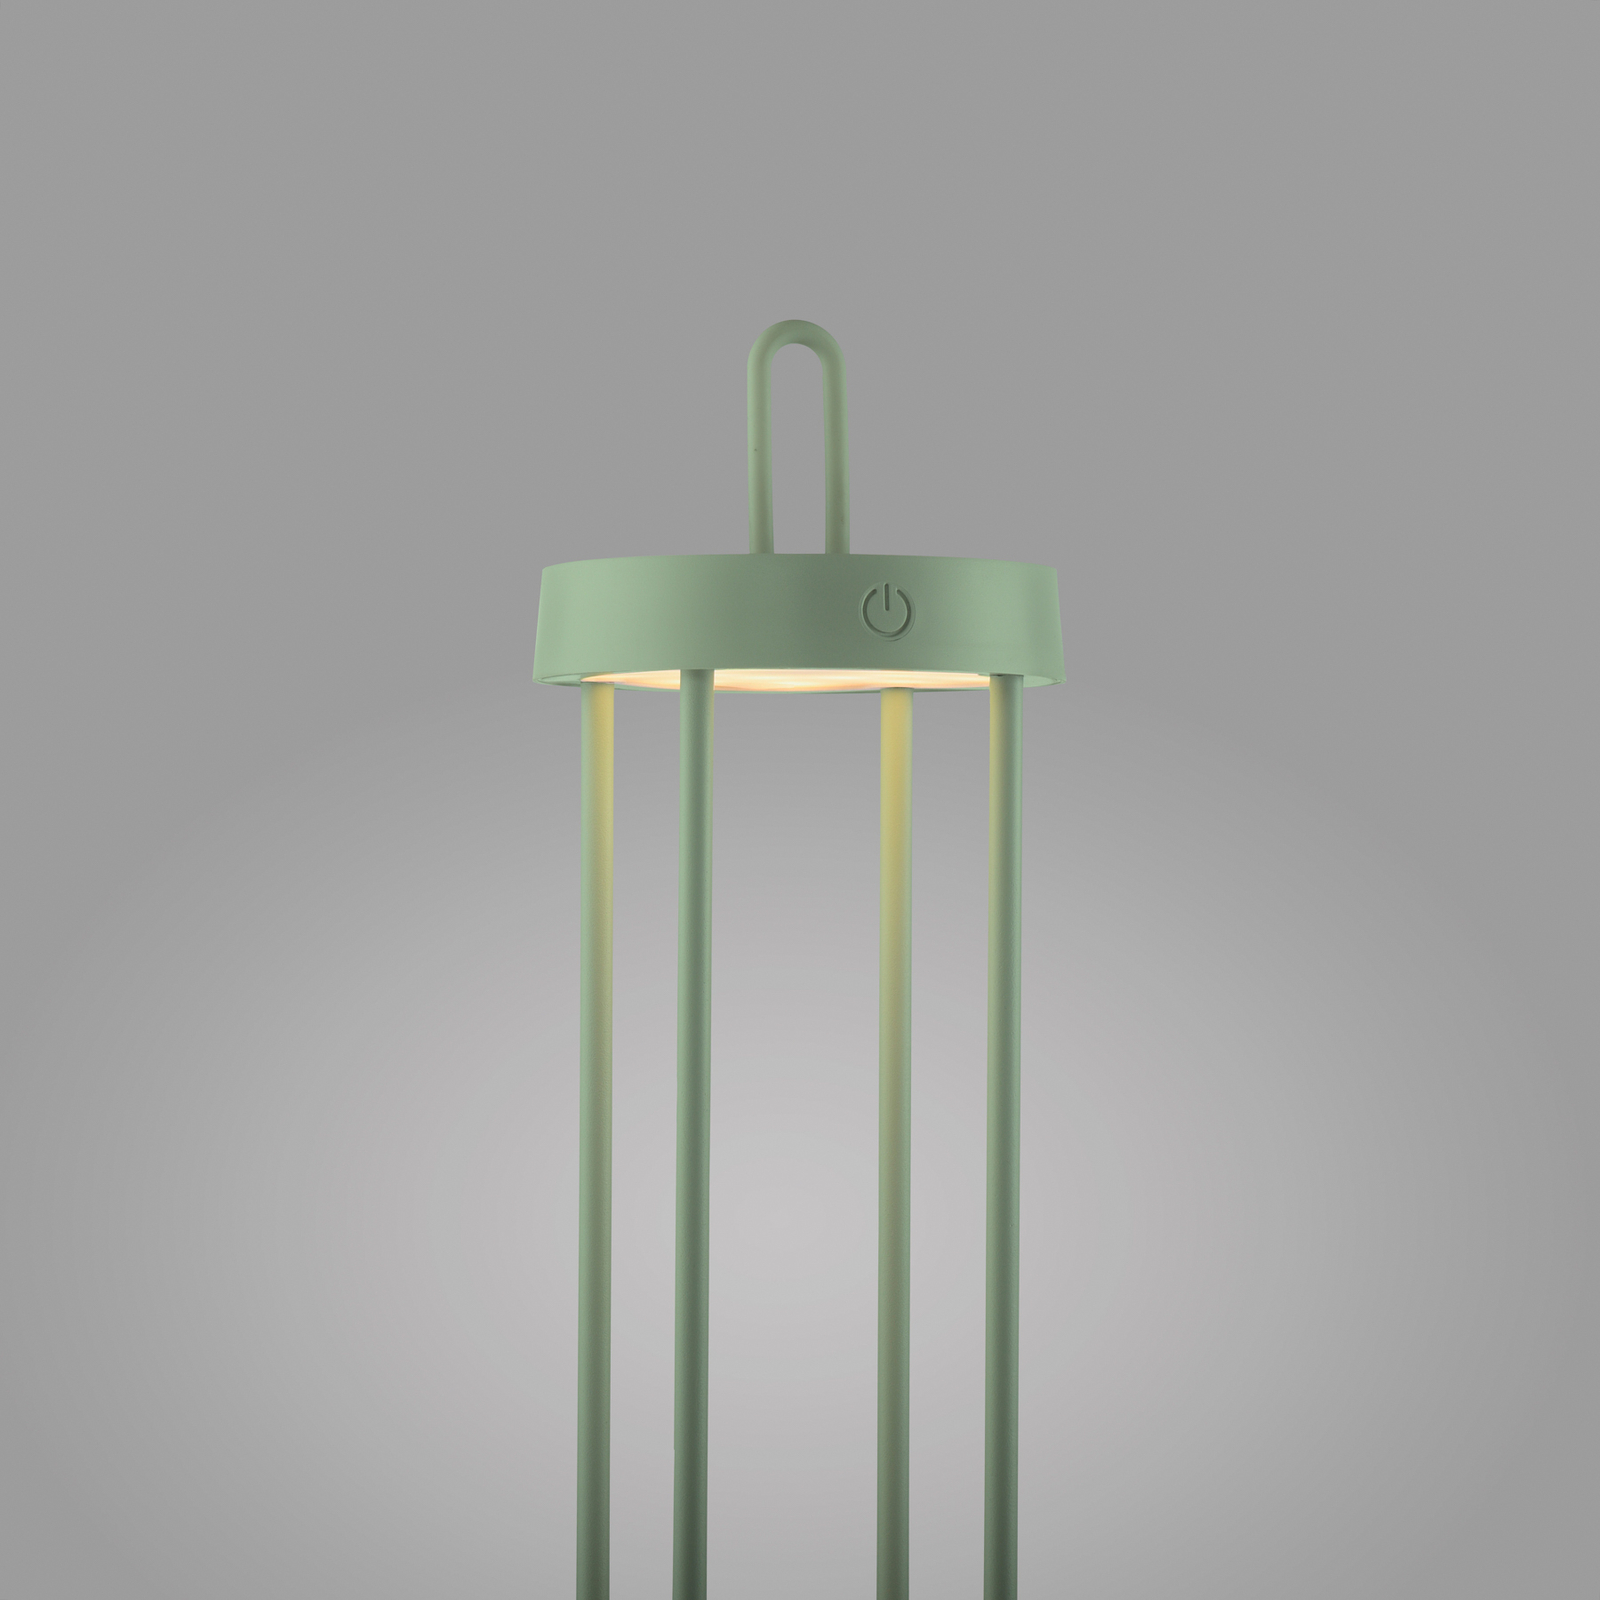 JUST LIGHT. LED table lamp Anselm, green, 50 cm, iron